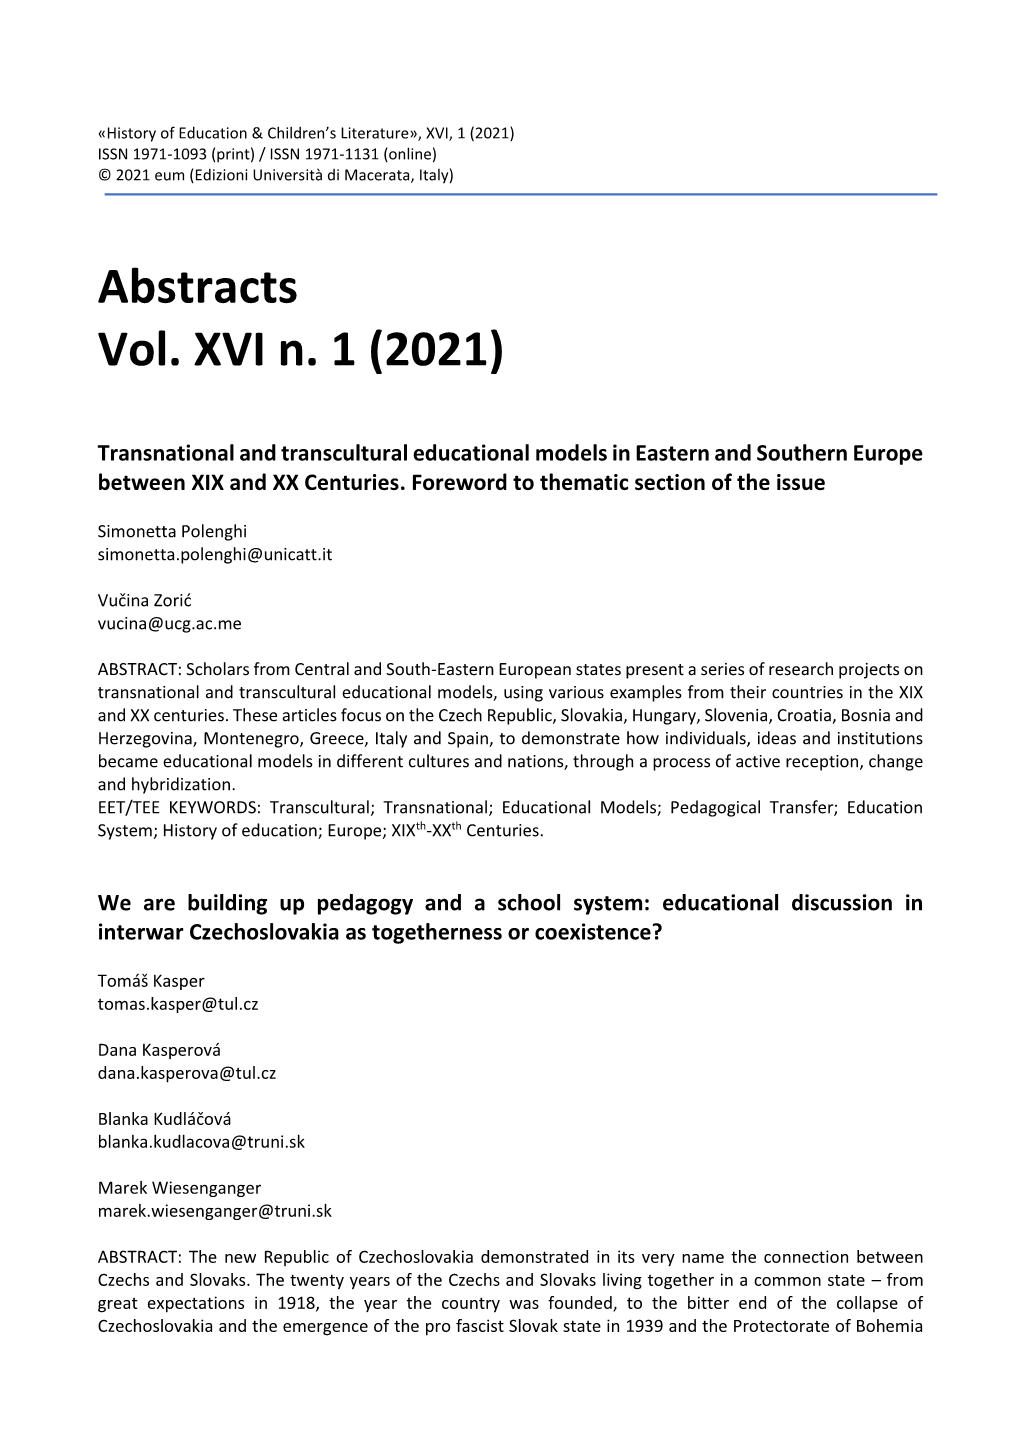 Abstracts Vol. XVI N. 1 (2021)